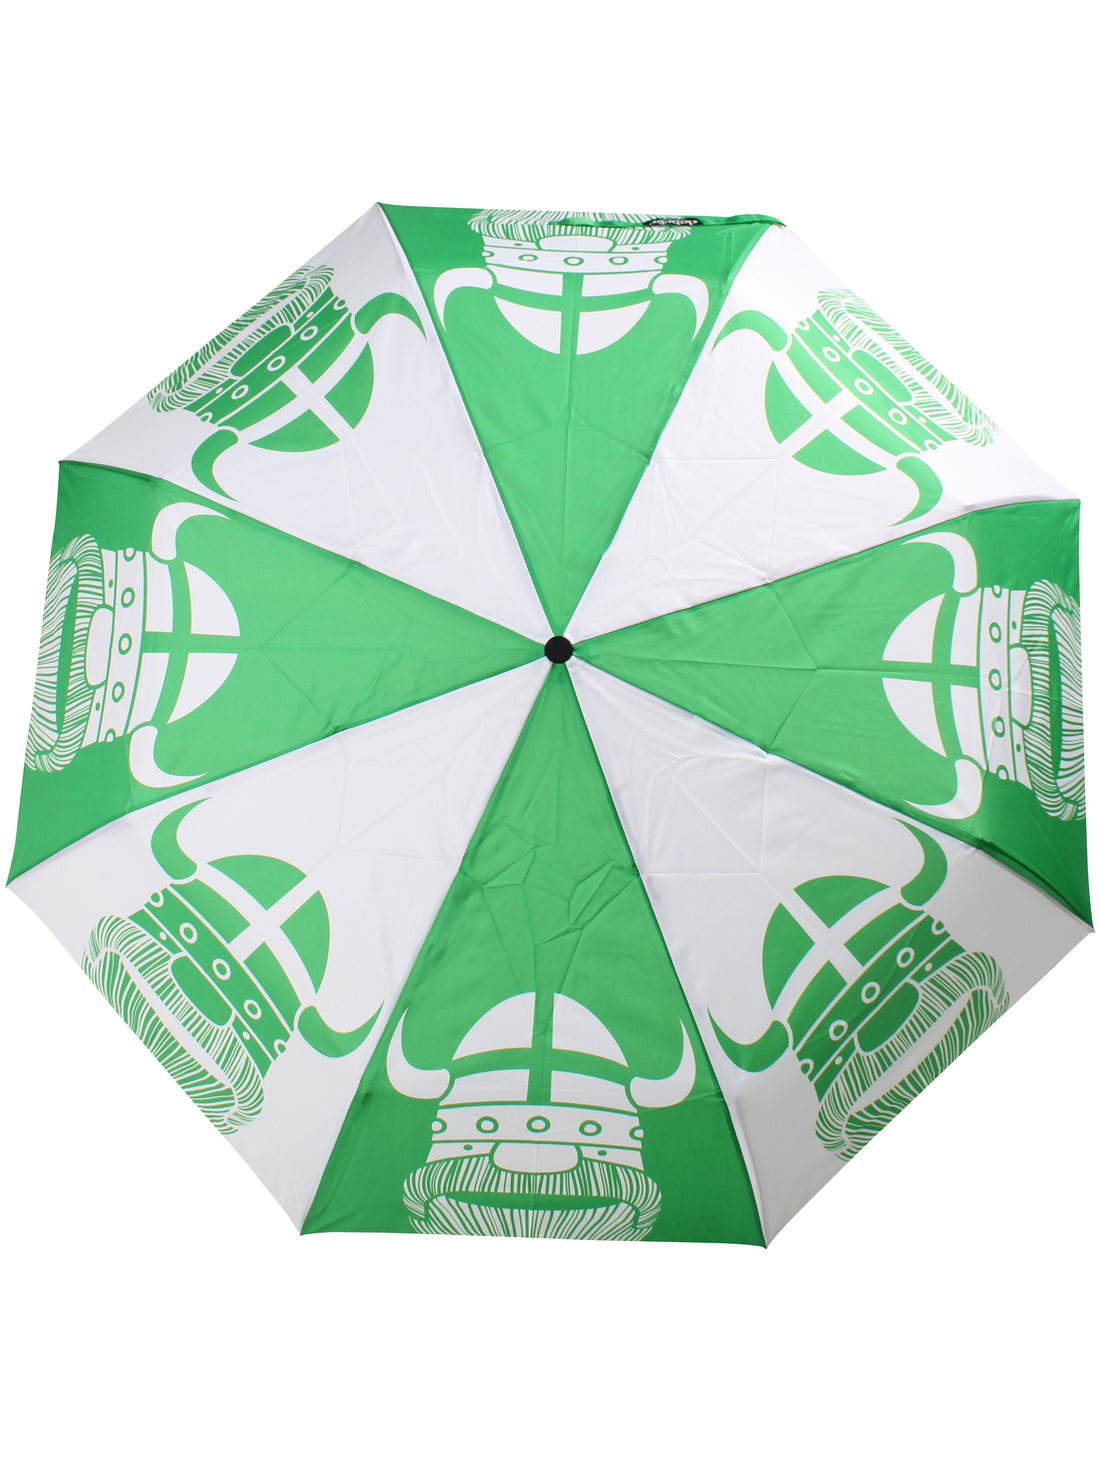 Danumbrella - Green/White ERIK